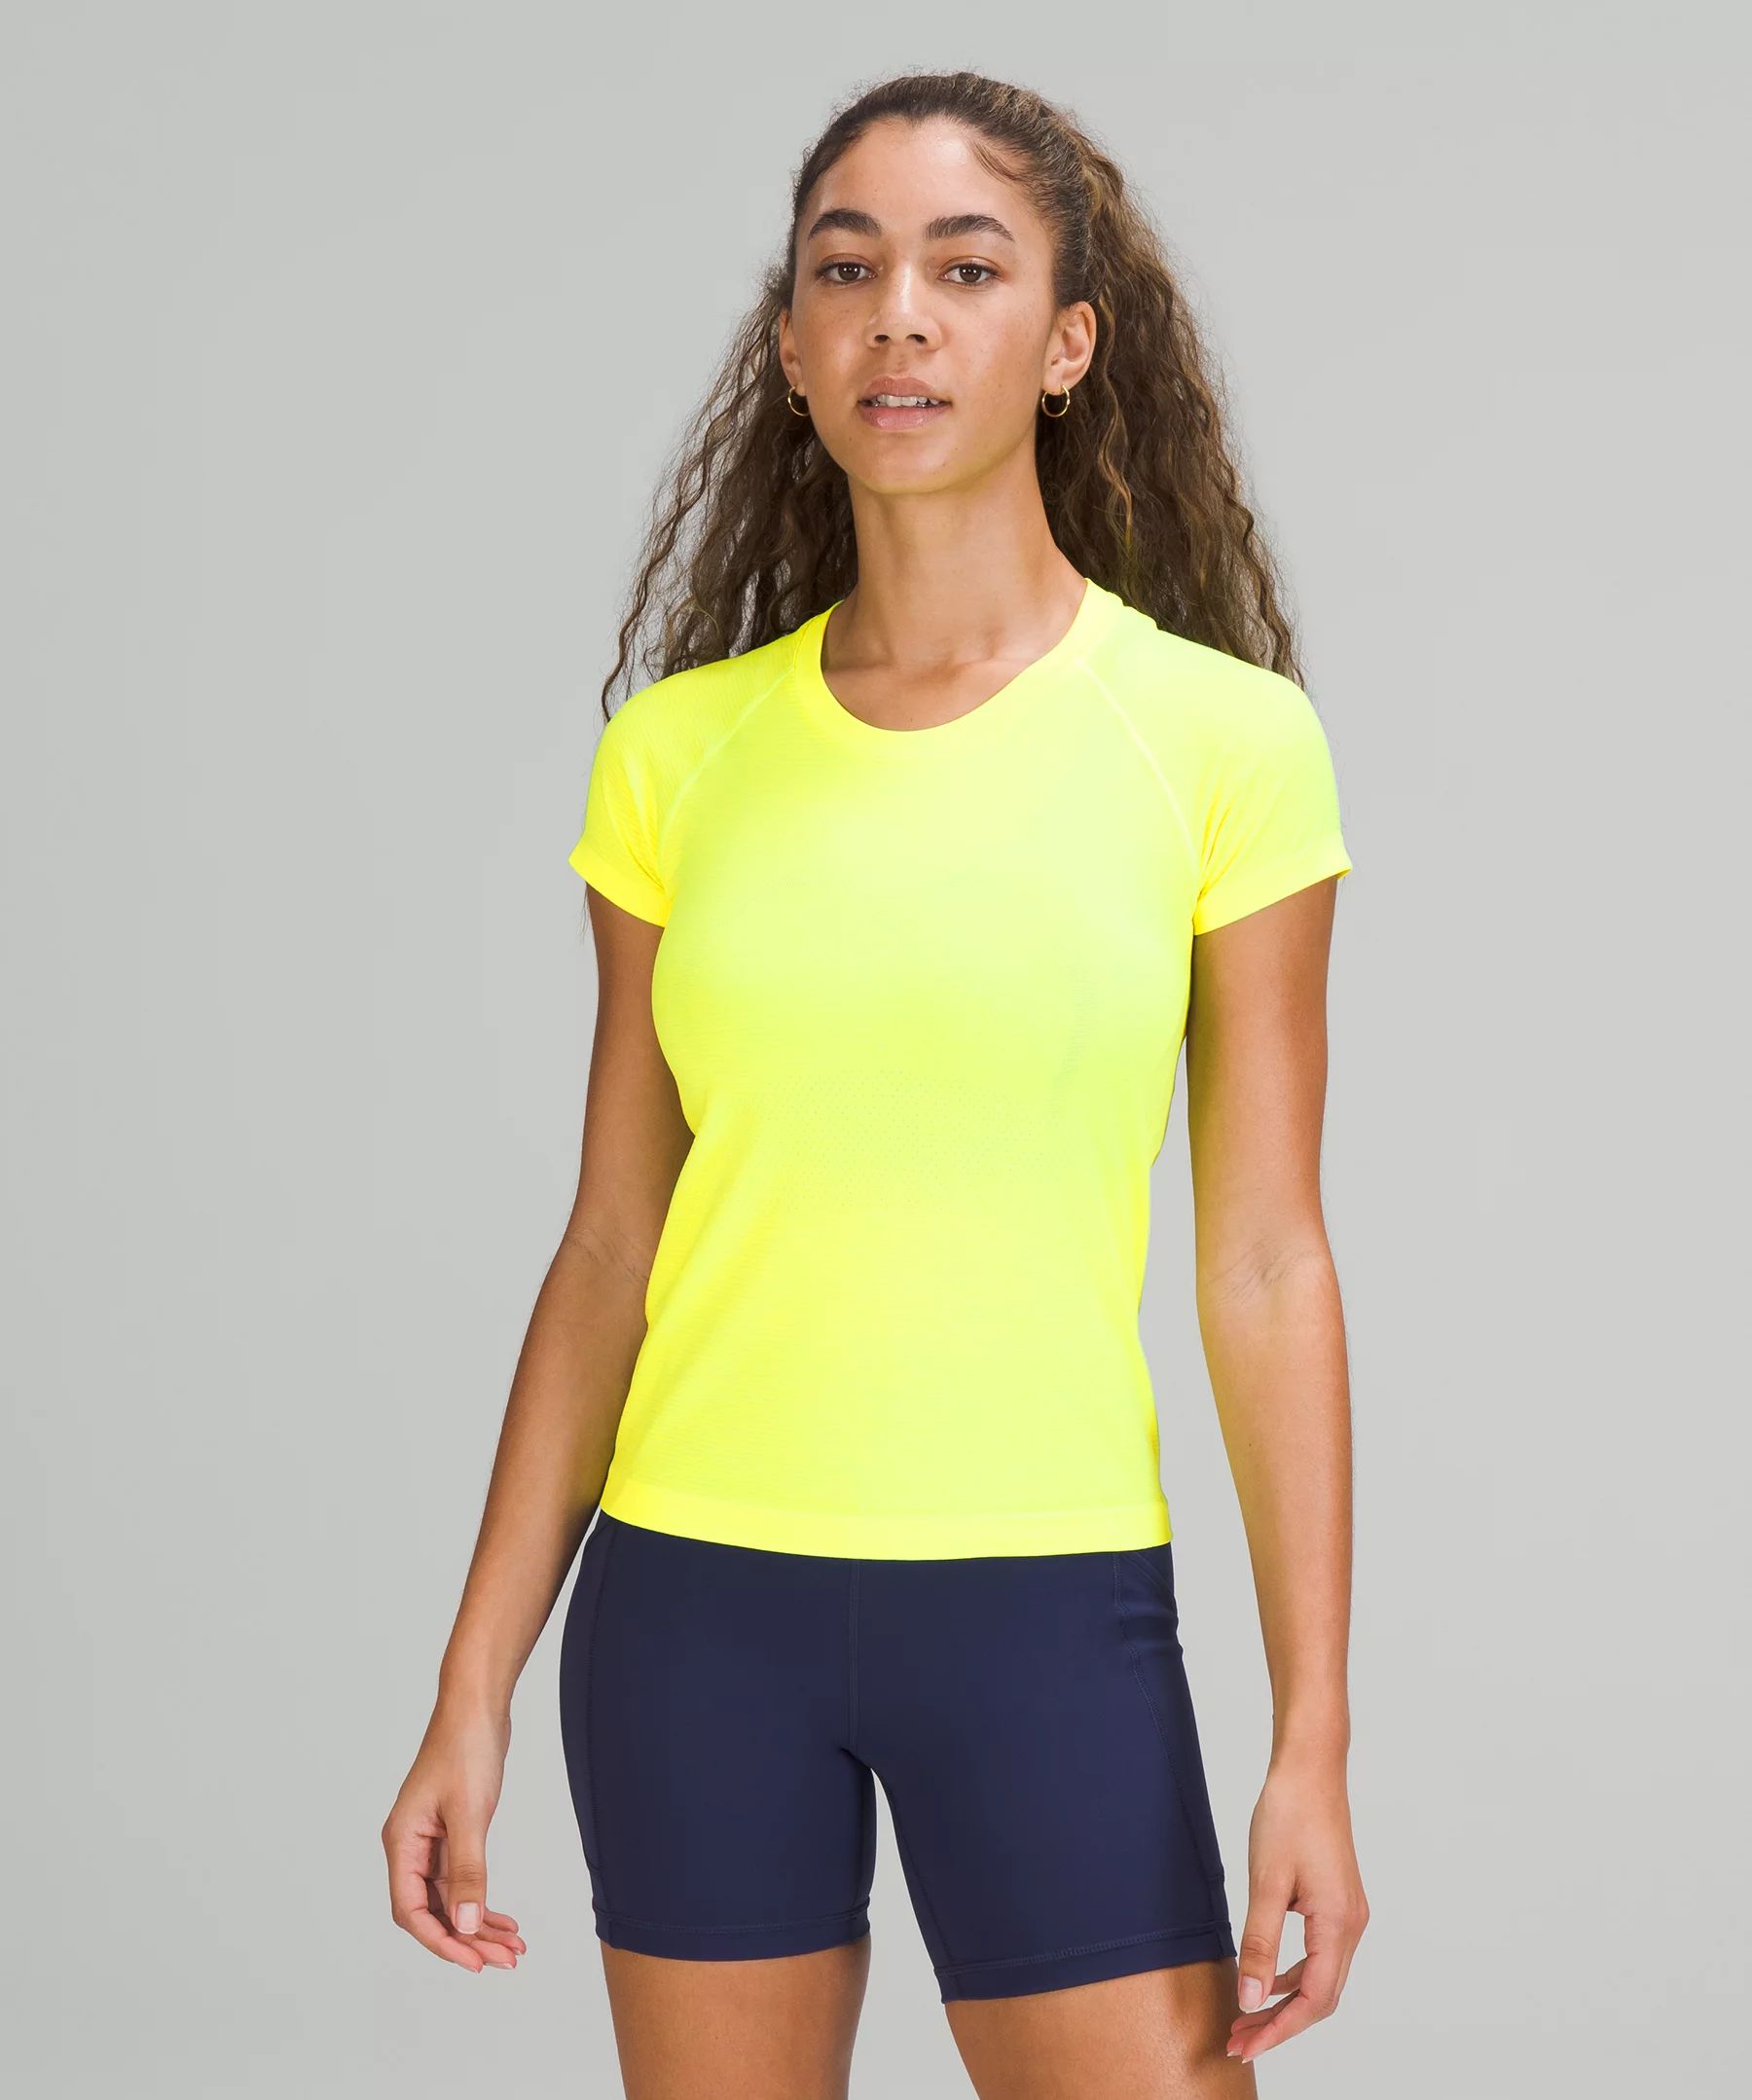 Swiftly Tech Short Sleeve Shirt 2.0 Race Length | Lululemon (US)